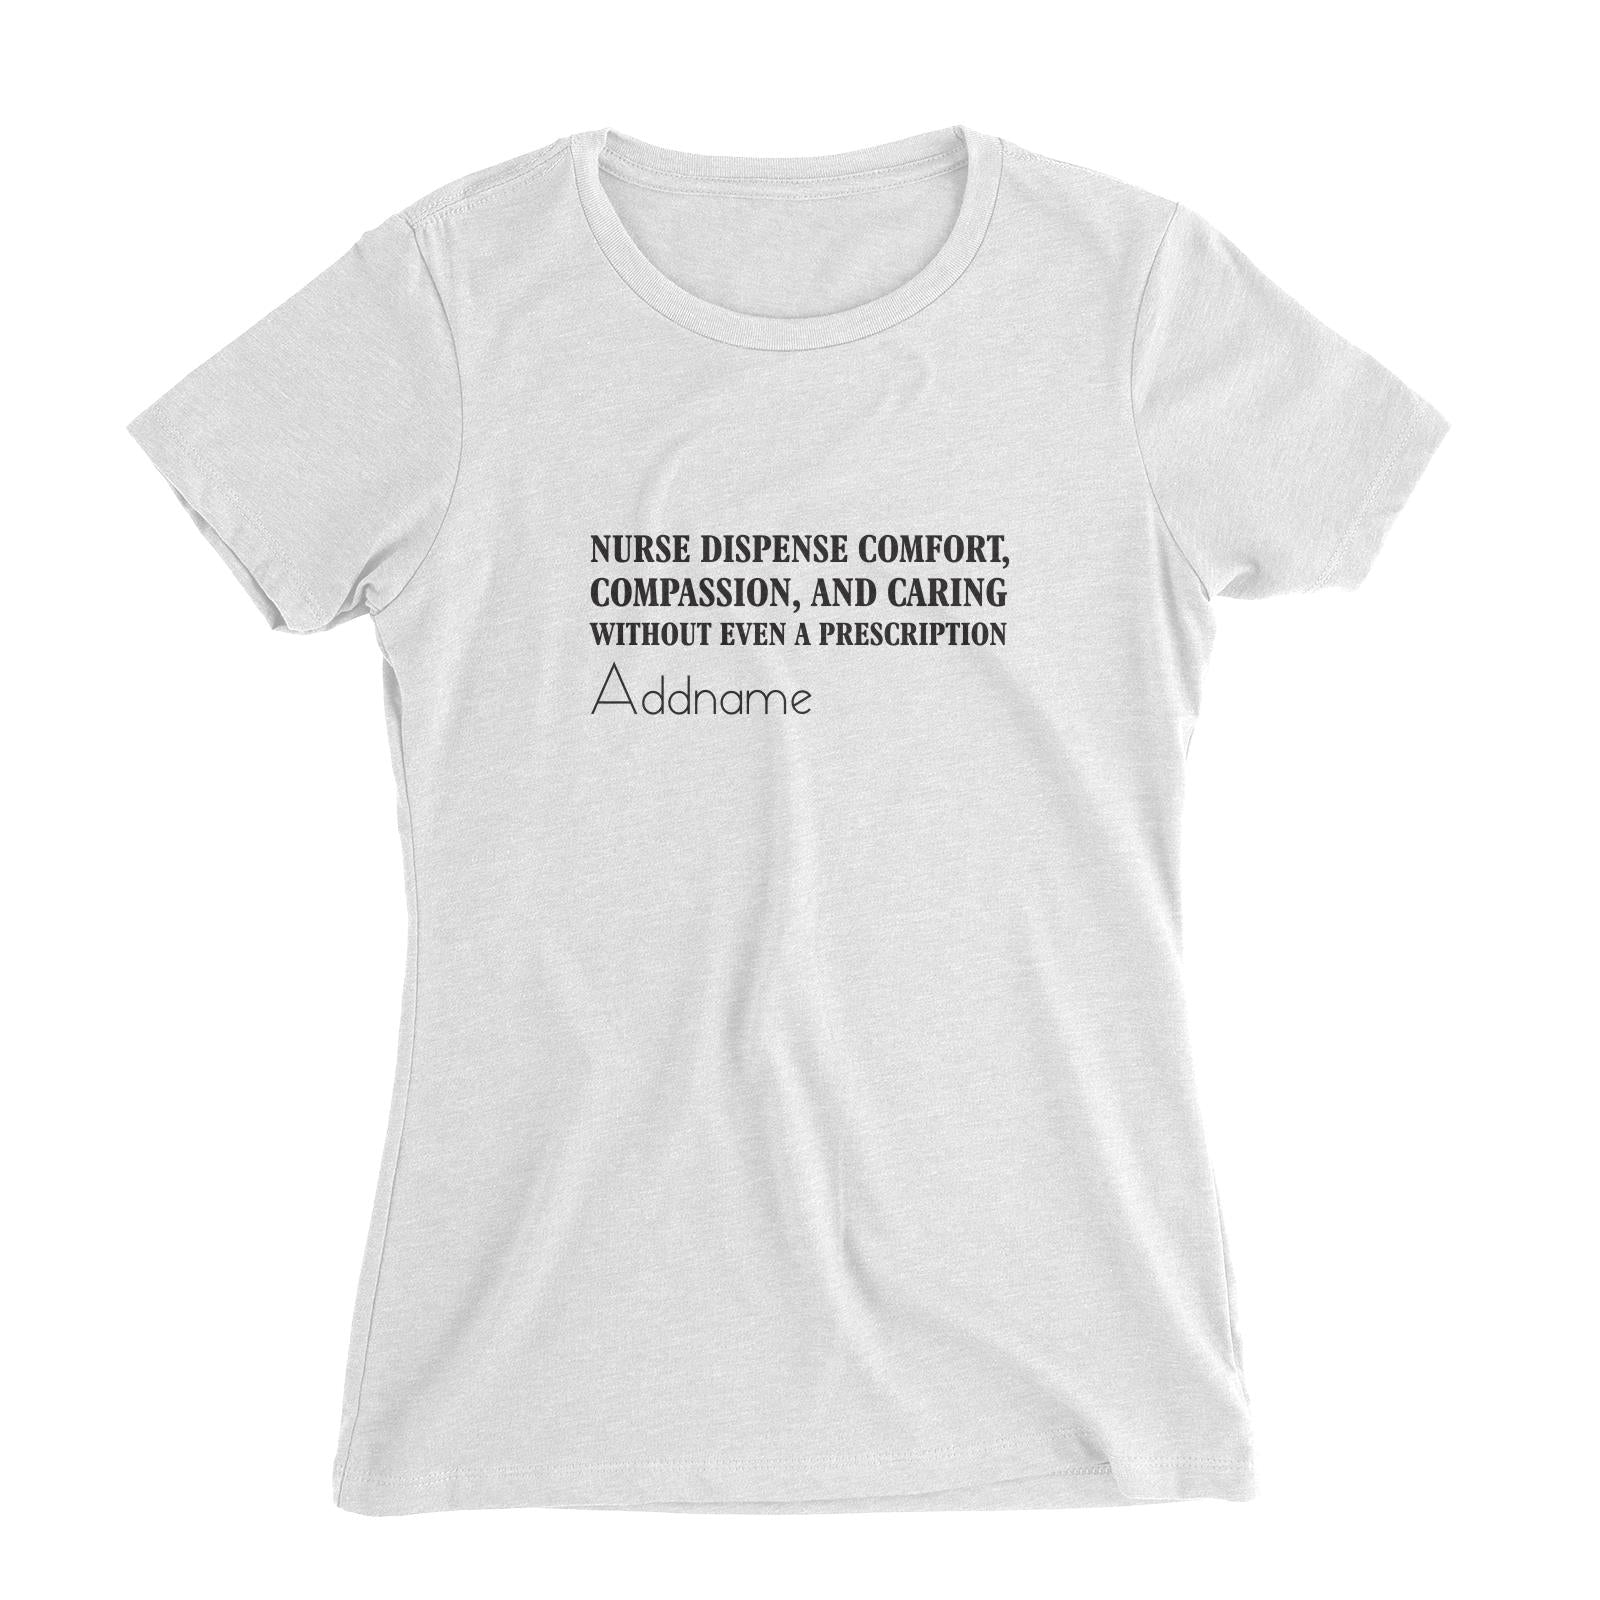 Nurse Dispense Comfort, Compassion, And Caring Without Even A Prescription Women's Slim Fit T-Shirt